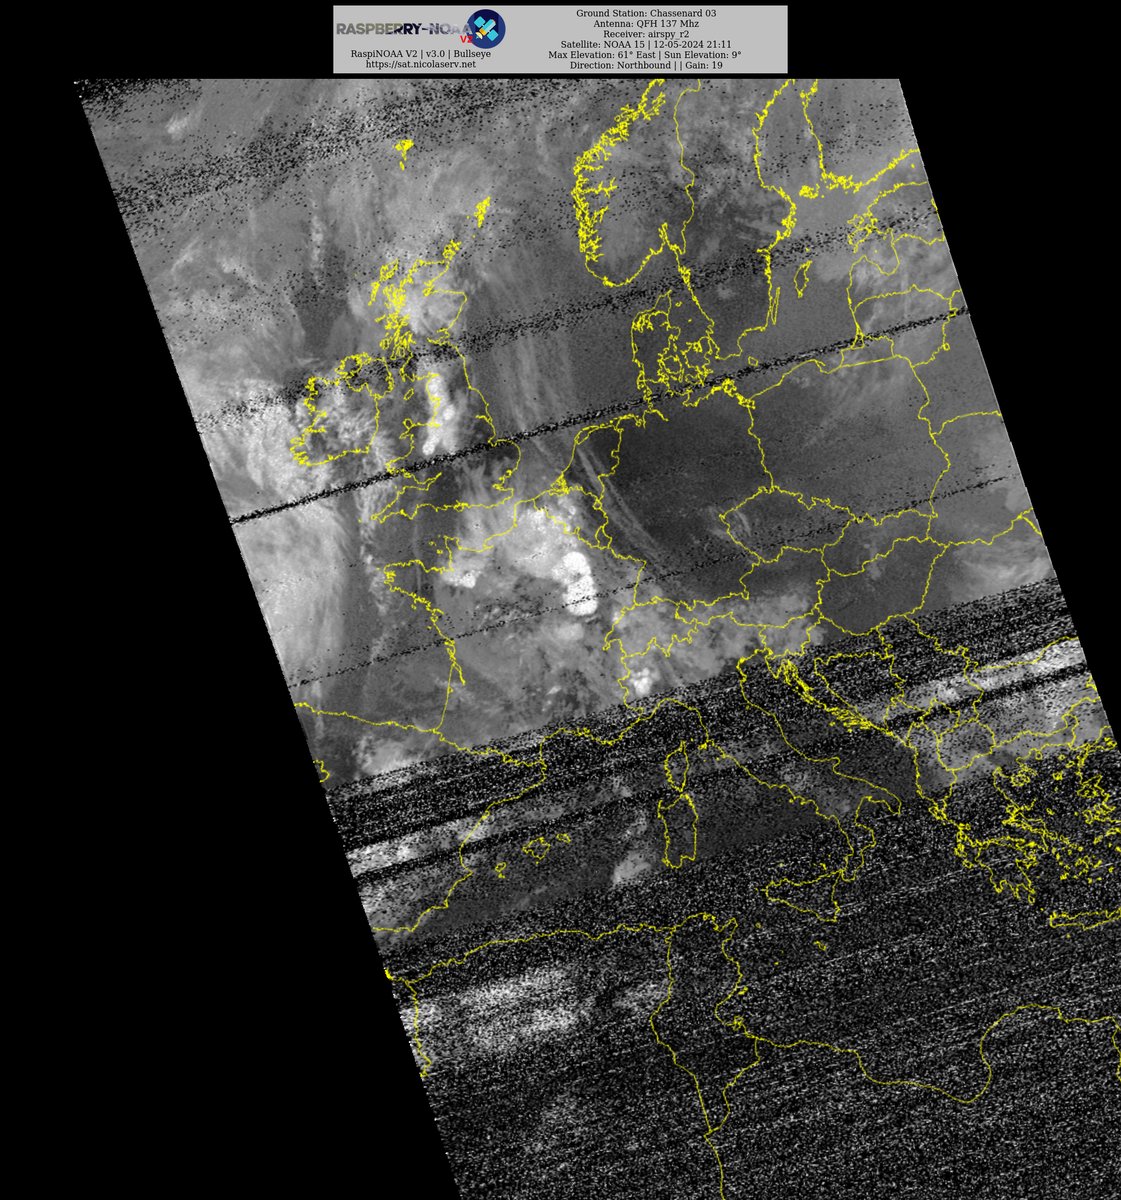 Ground Station: Chassenard 03 NOAA 15 12-05-2024 20:02 CEST  Max Elev: 61° E Sun Elevation: 9° Gain: 19 | Northbound

#NOAA #NOAA15 #NOAA18 #NOAA19 #MeteorM2_3 #MeteorM2_4 #weather #weathersats #APT #LRPT #wxtoimg #MeteorDemod #rtlsdr #gpredict #raspberrypi #RN2 #ISS